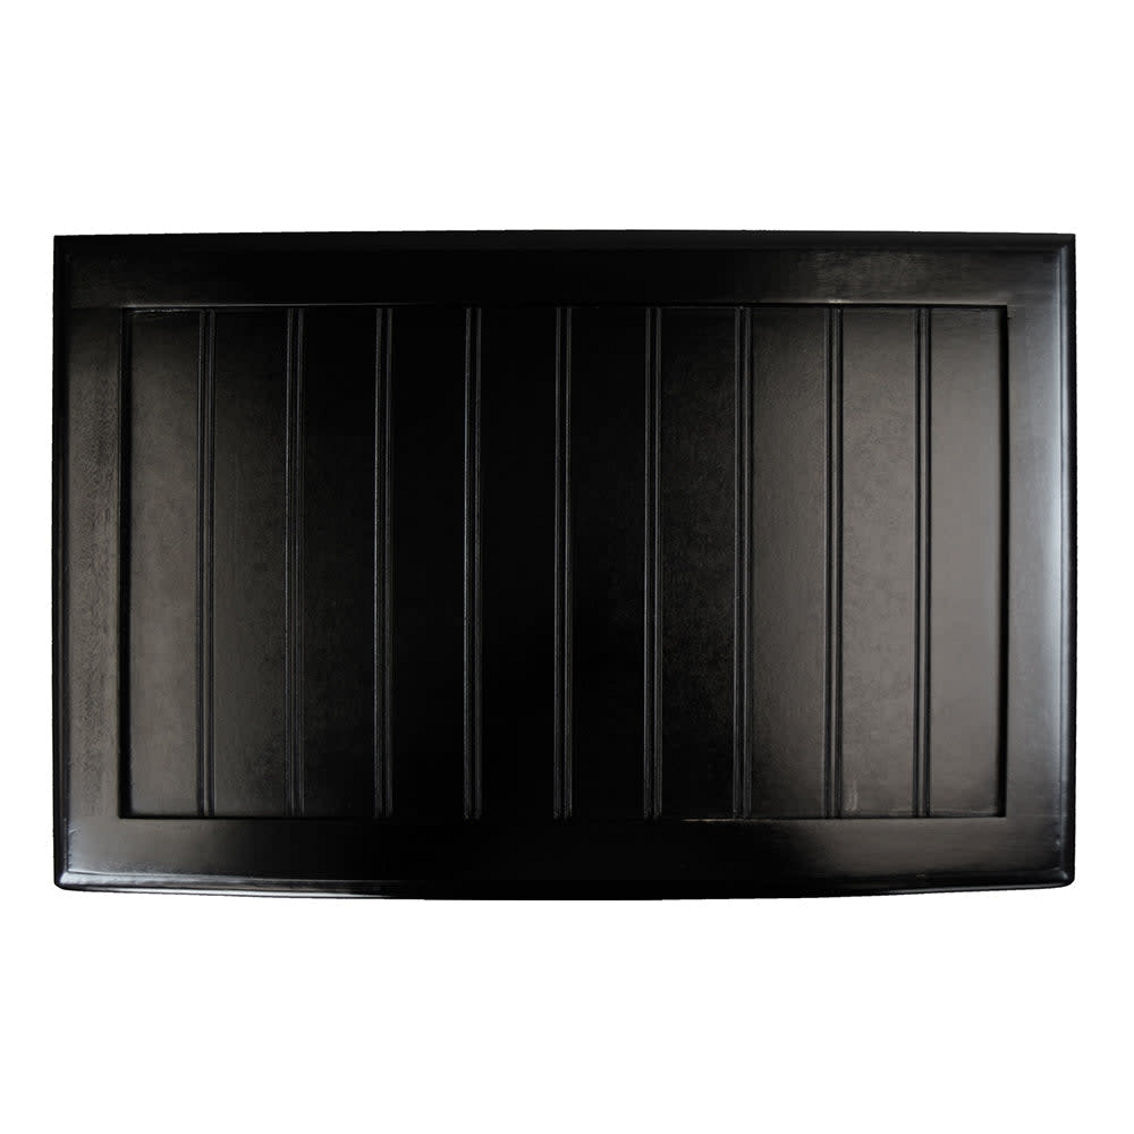 Oceanstar Rectangular Laundry Wood Hamper - Black - Image 4 of 5